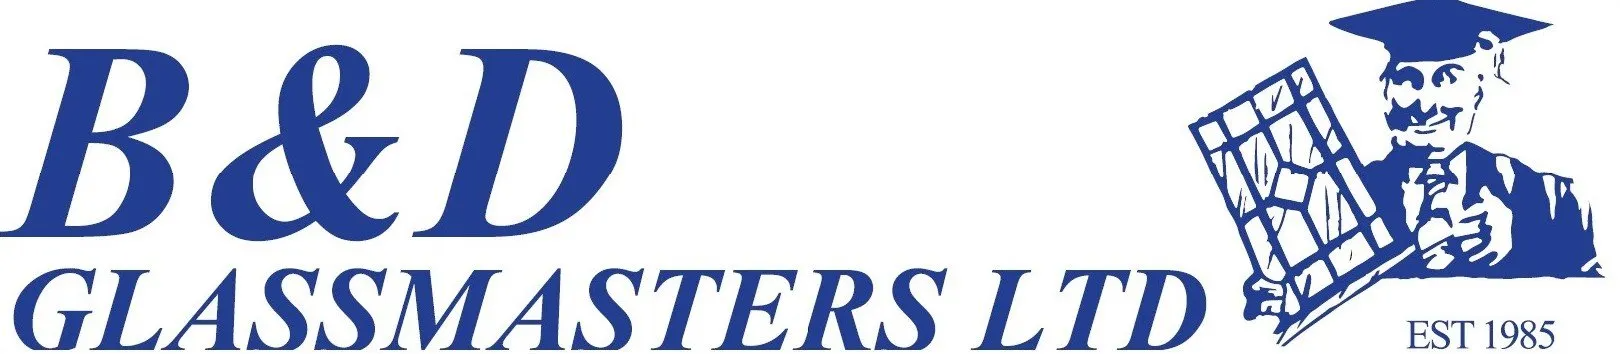 B & D Glassmasters logo